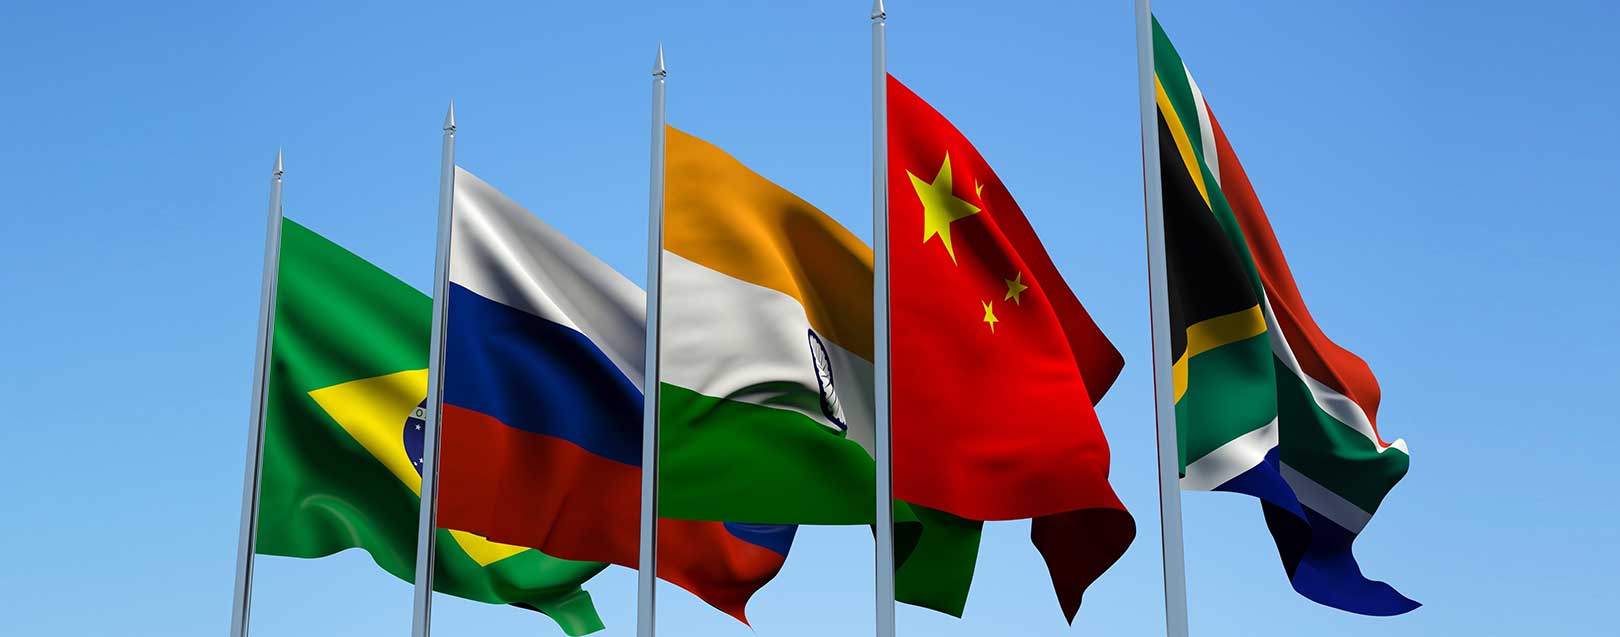 India to host BRICS agri development meet on Sept 22-23